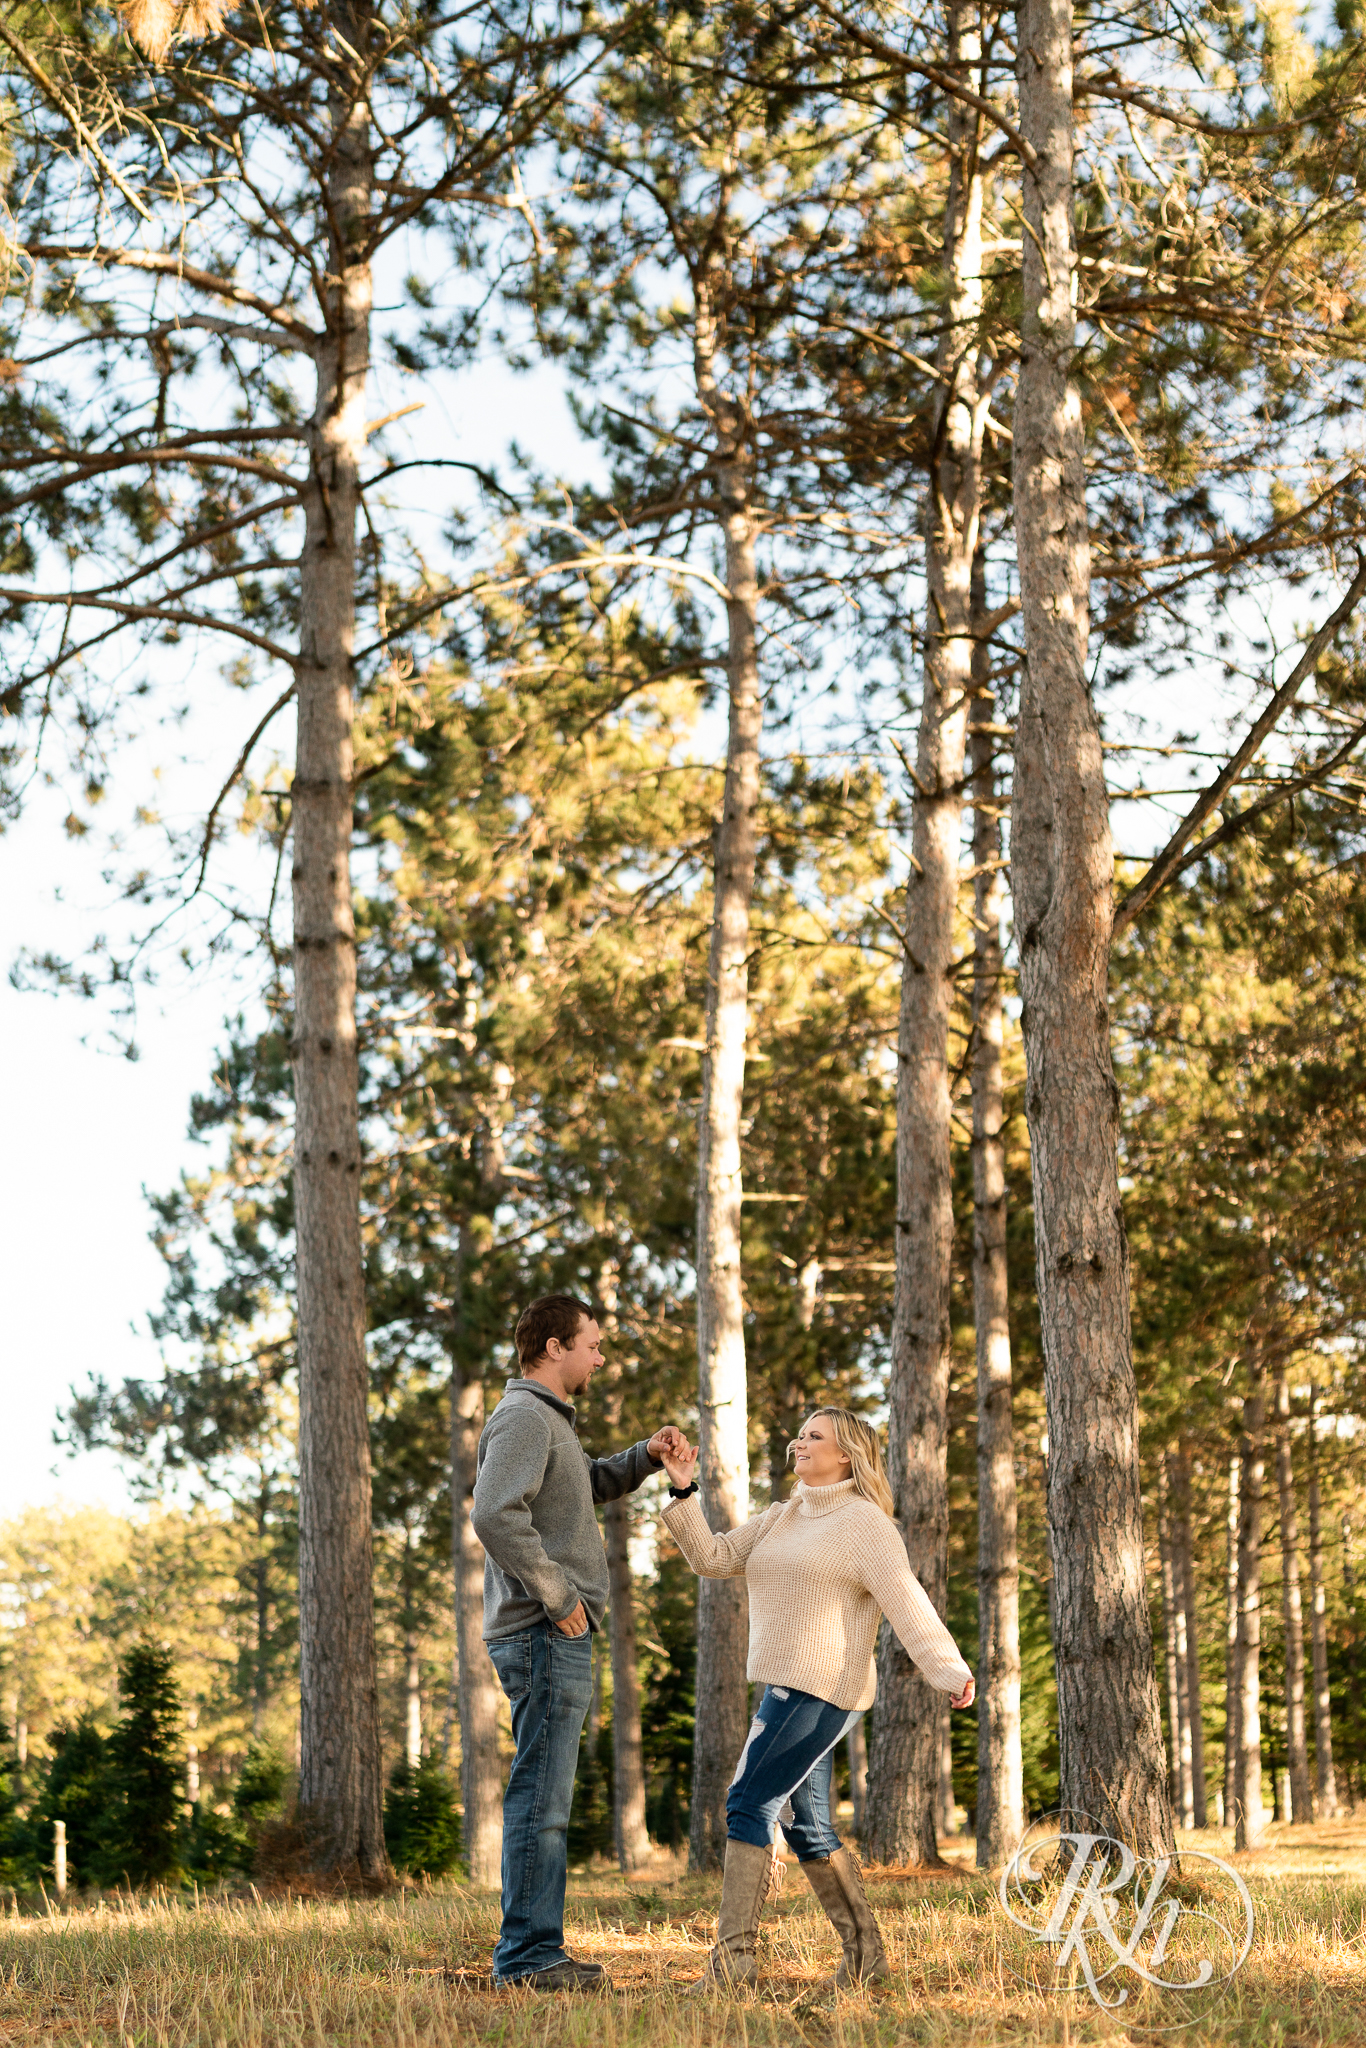 Man and woman dancing in between trees at Hansen Tree Farm in Anoka, Minnesota.